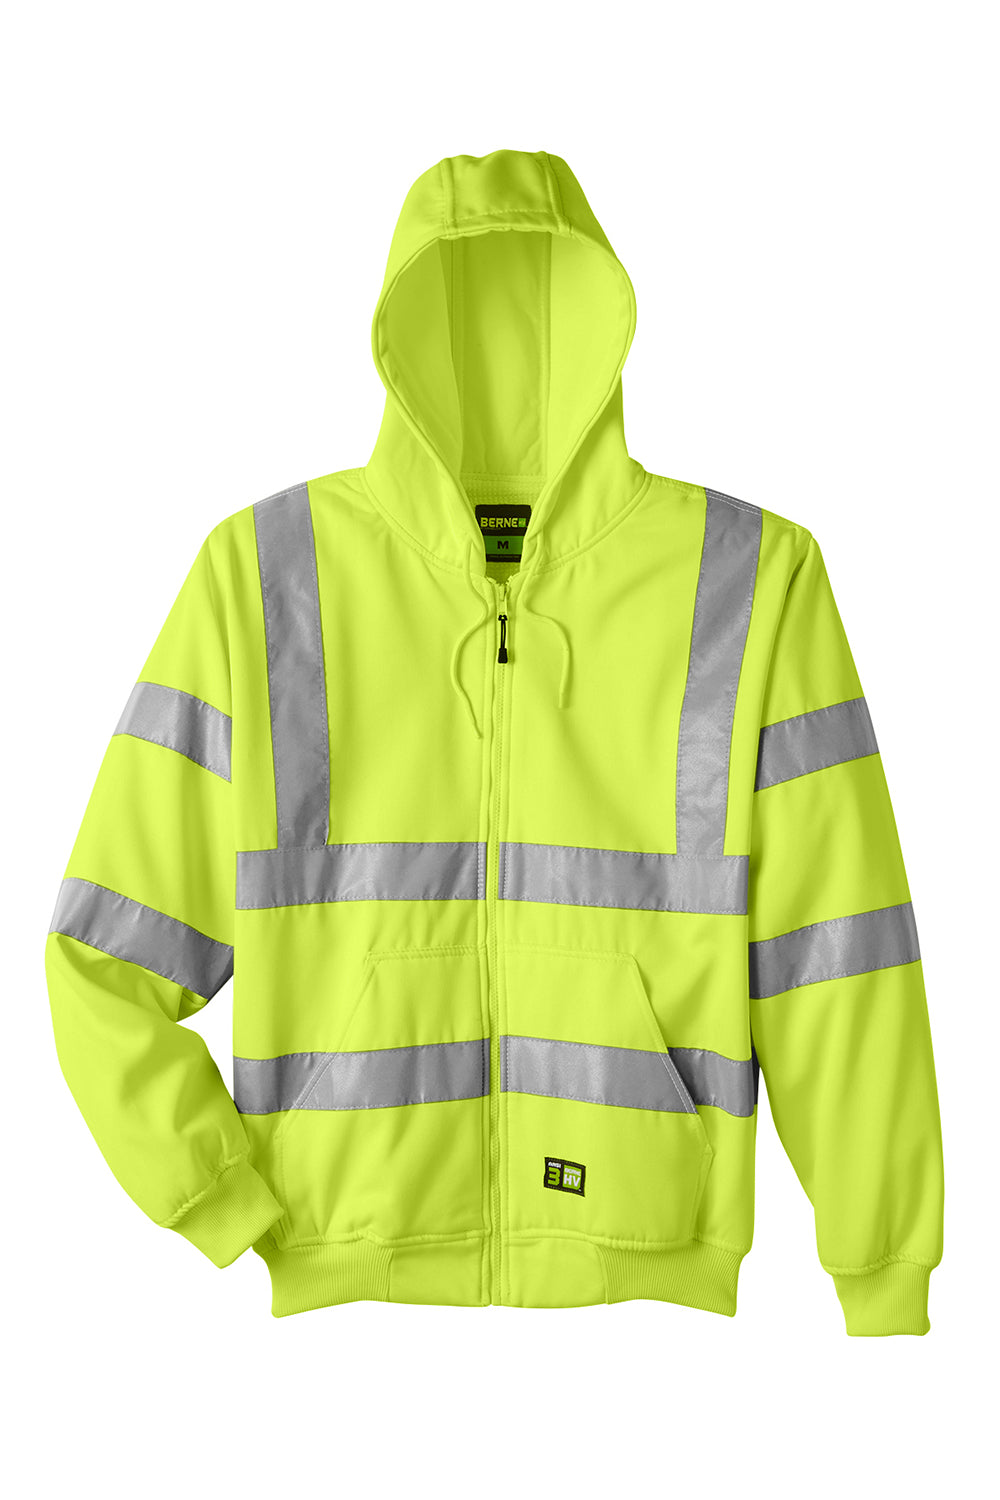 Berne HVF021 Mens High Visability Fleece Full Zip Hooded Sweatshirt Hoodie Safety Yellow Flat Front